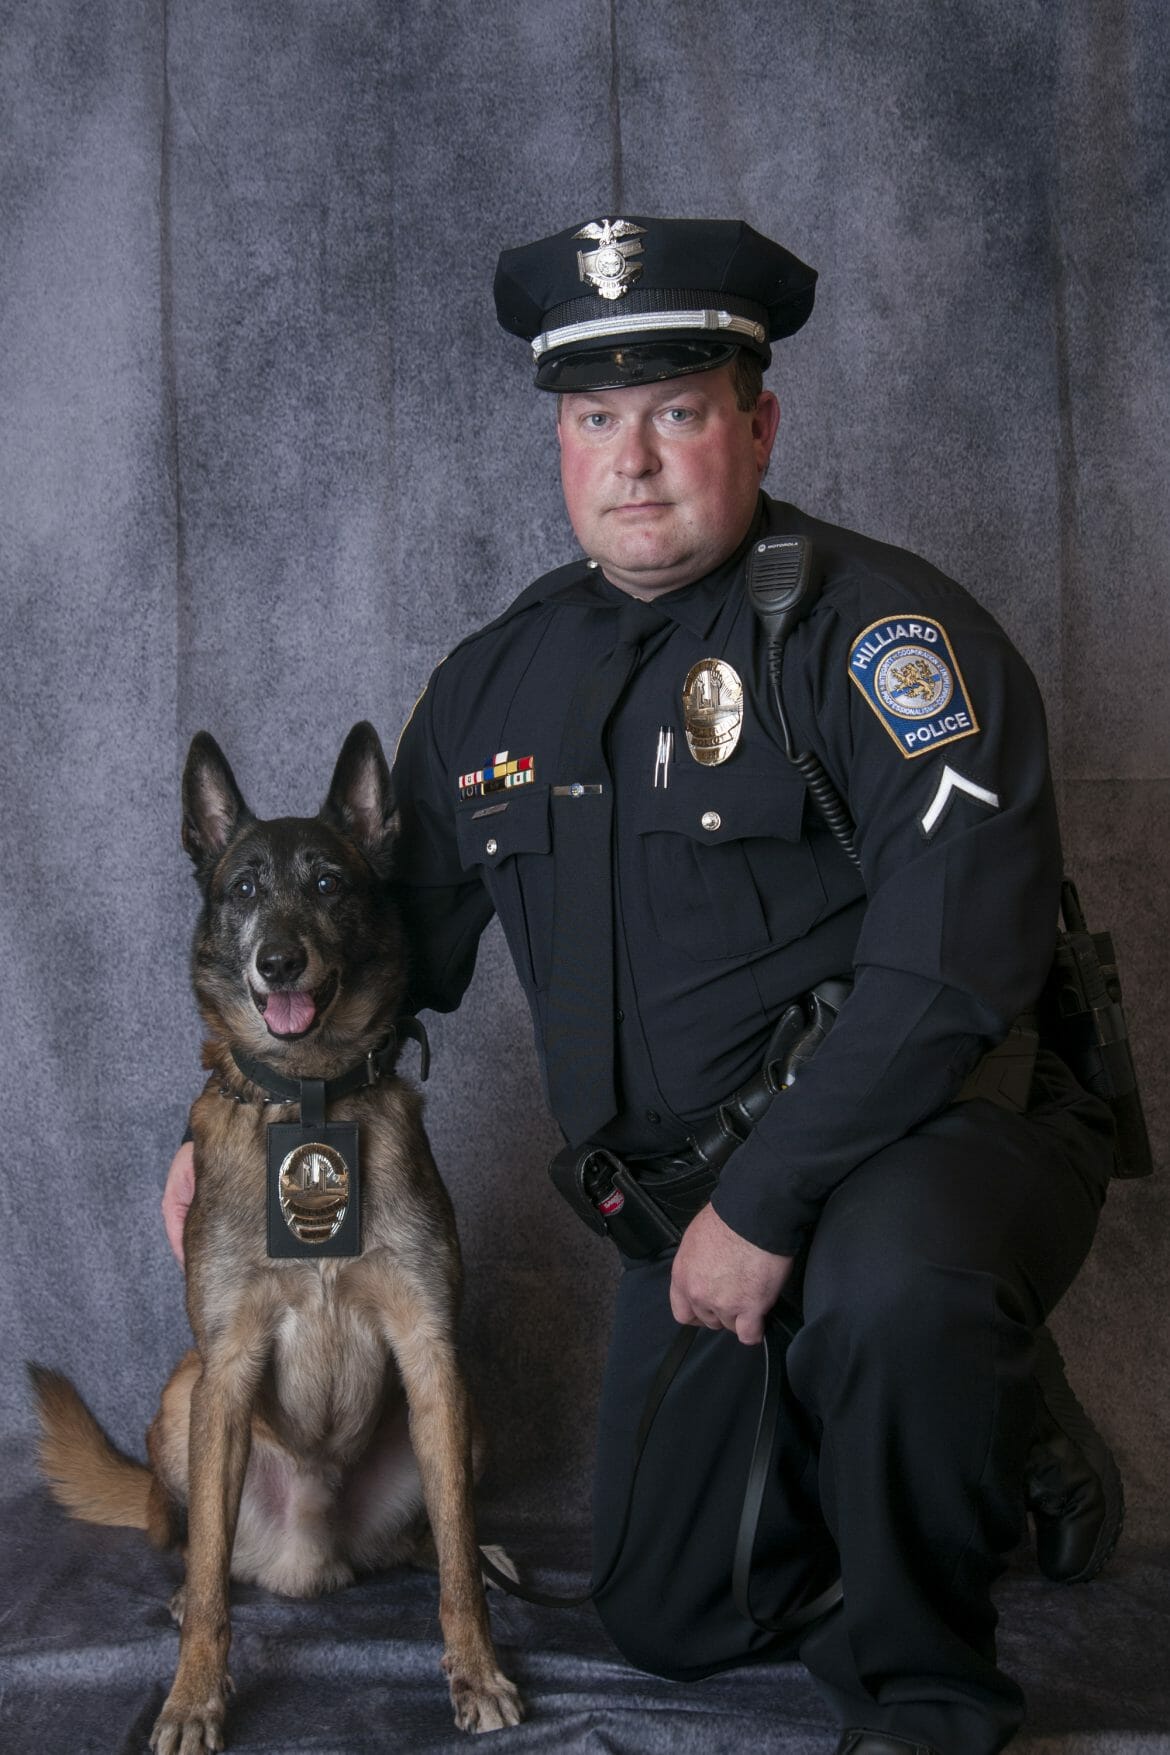 Officer Large and k9 Oz official portrait